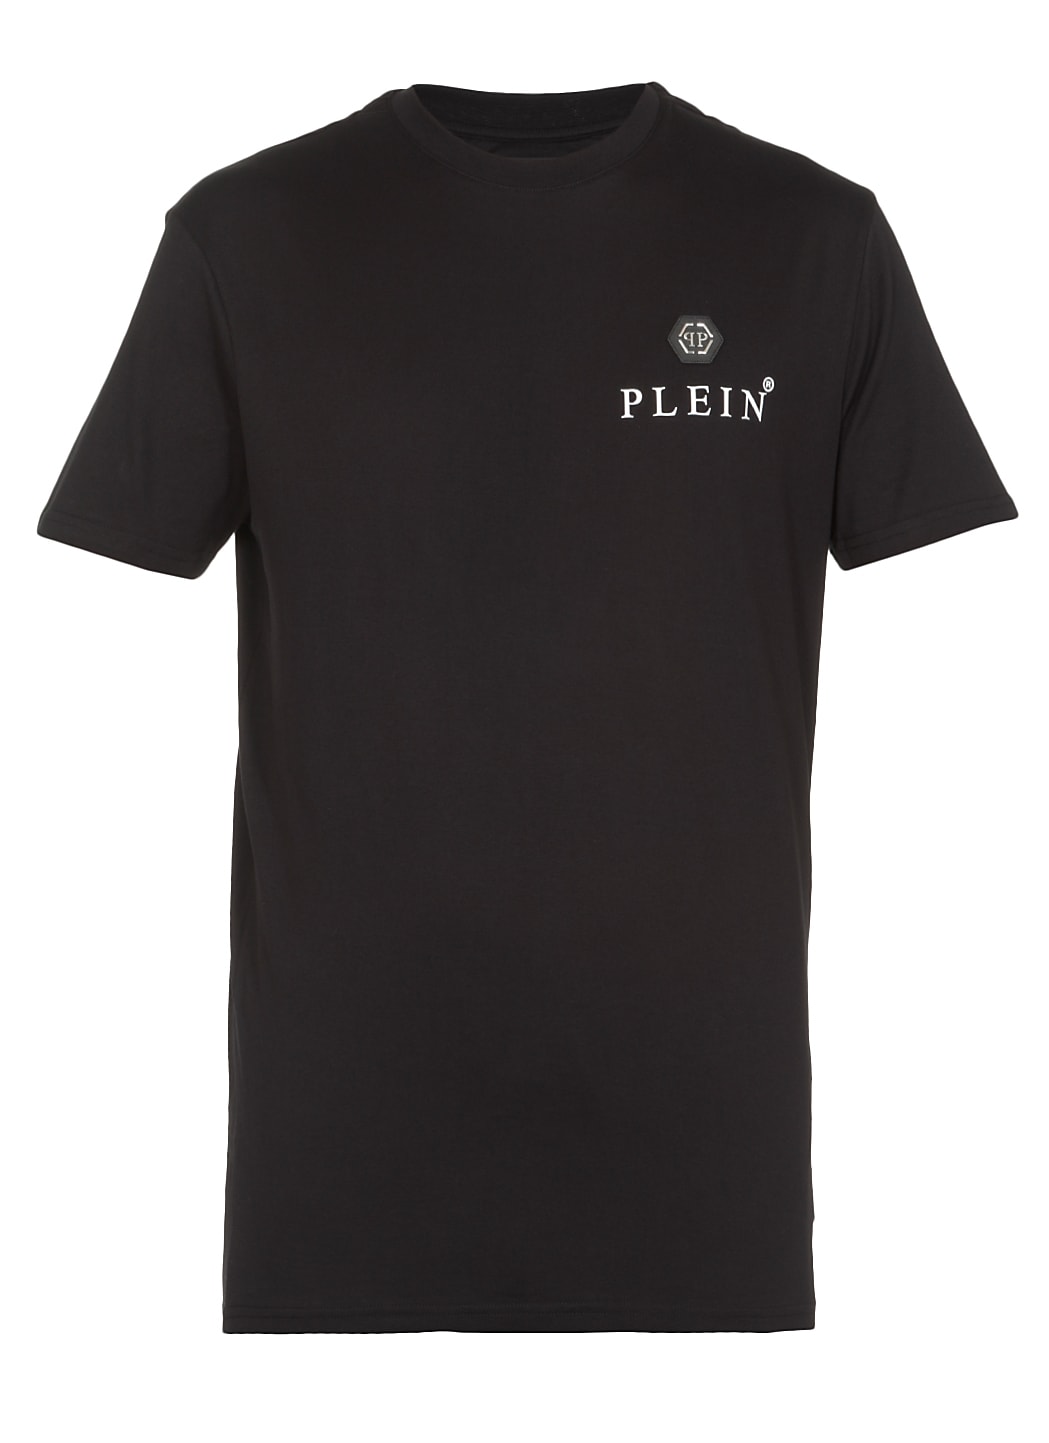 Philipp Plein Iconic Plein T-shirt